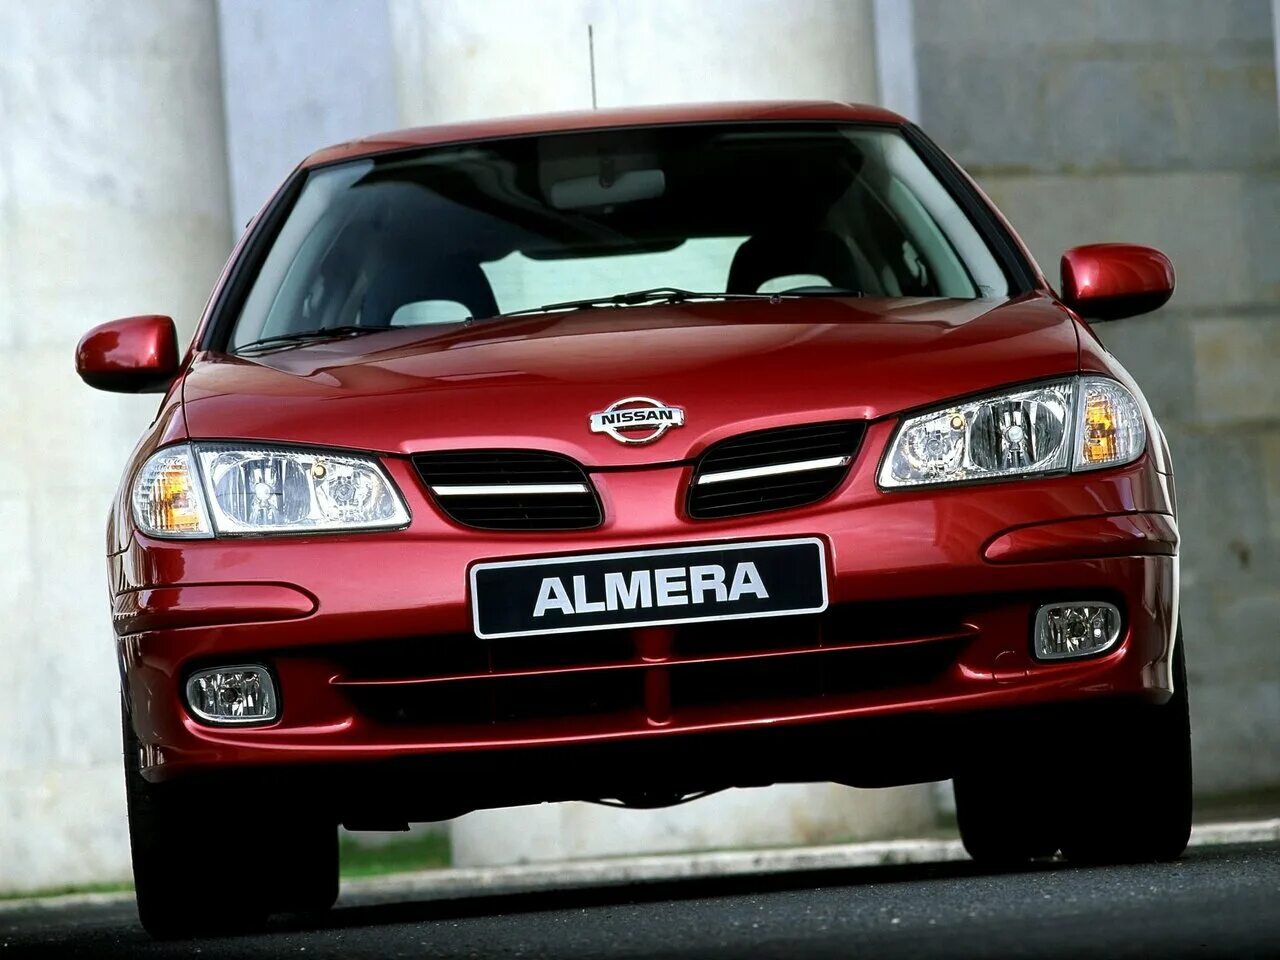 N16 хэтчбек. Nissan Almera n16. Nissan Almera II (n16). Nissan Altima n16. Nissan Almera n16 2000.